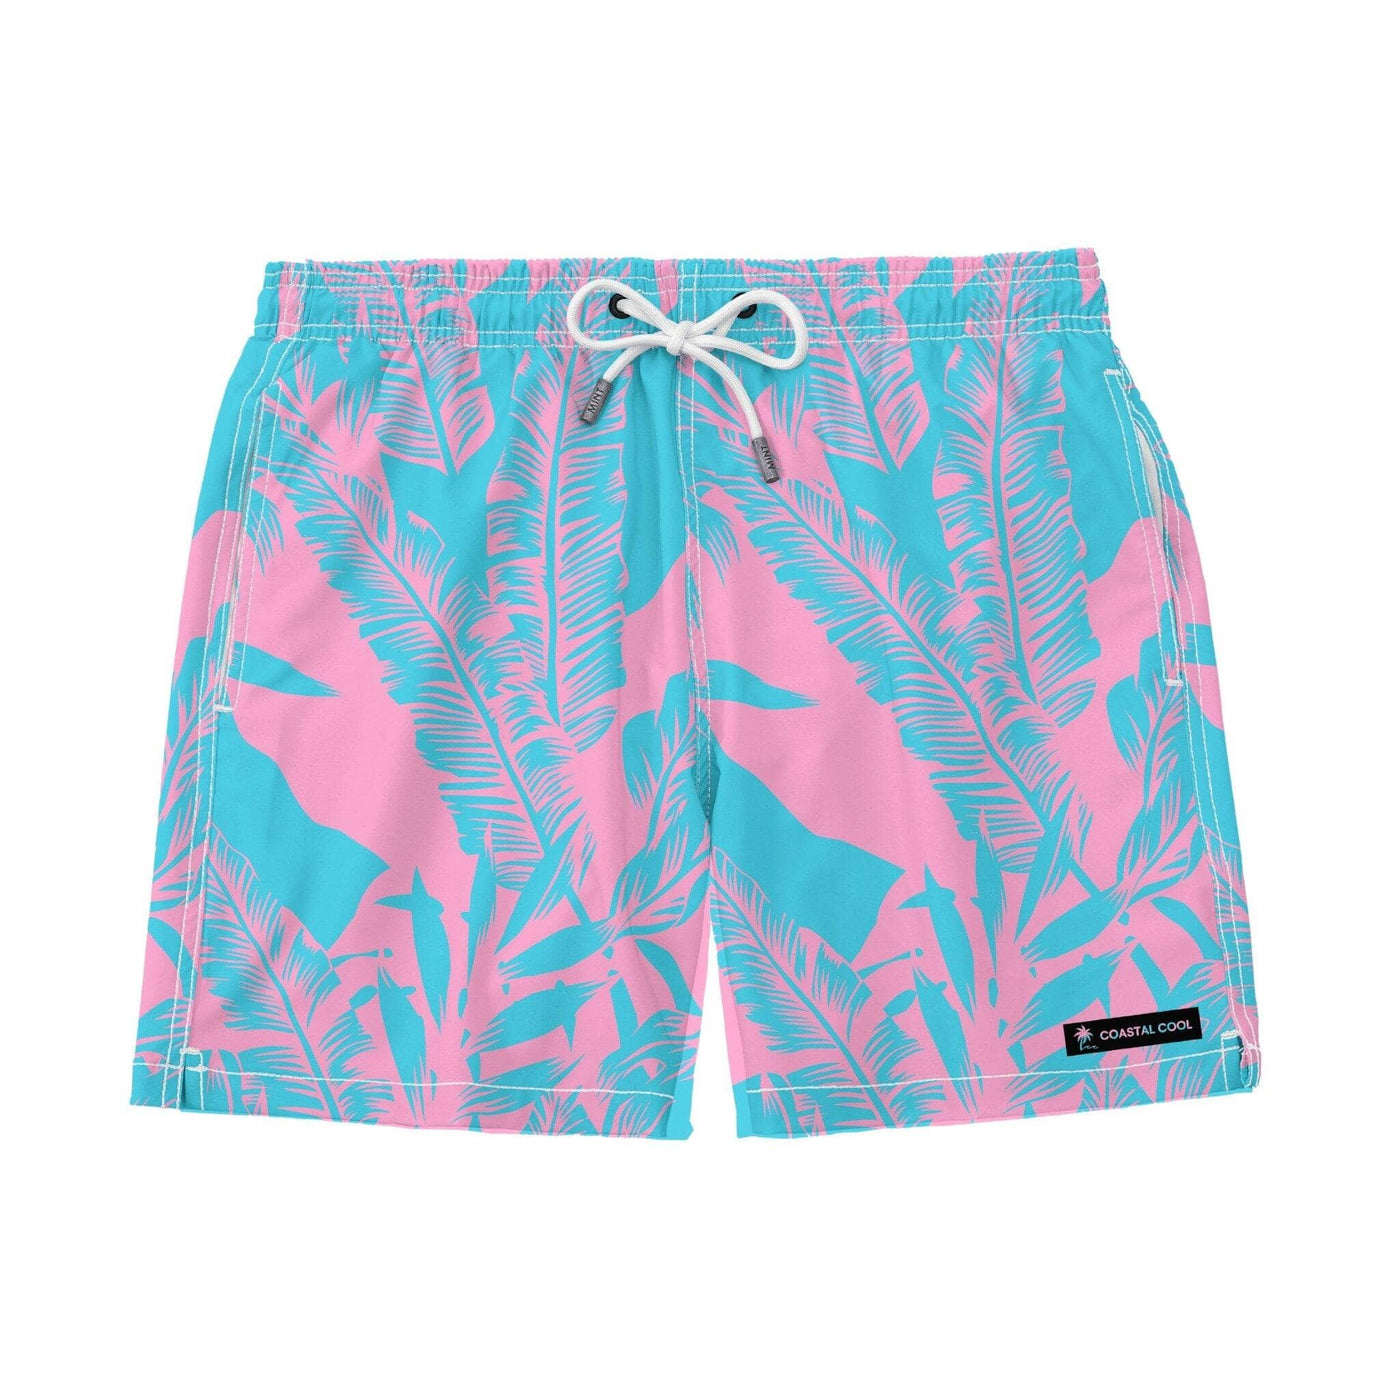 Beach Bum Swim Trunks - Coastal Cool - Swimwear and Beachwear - Recycled fabrics